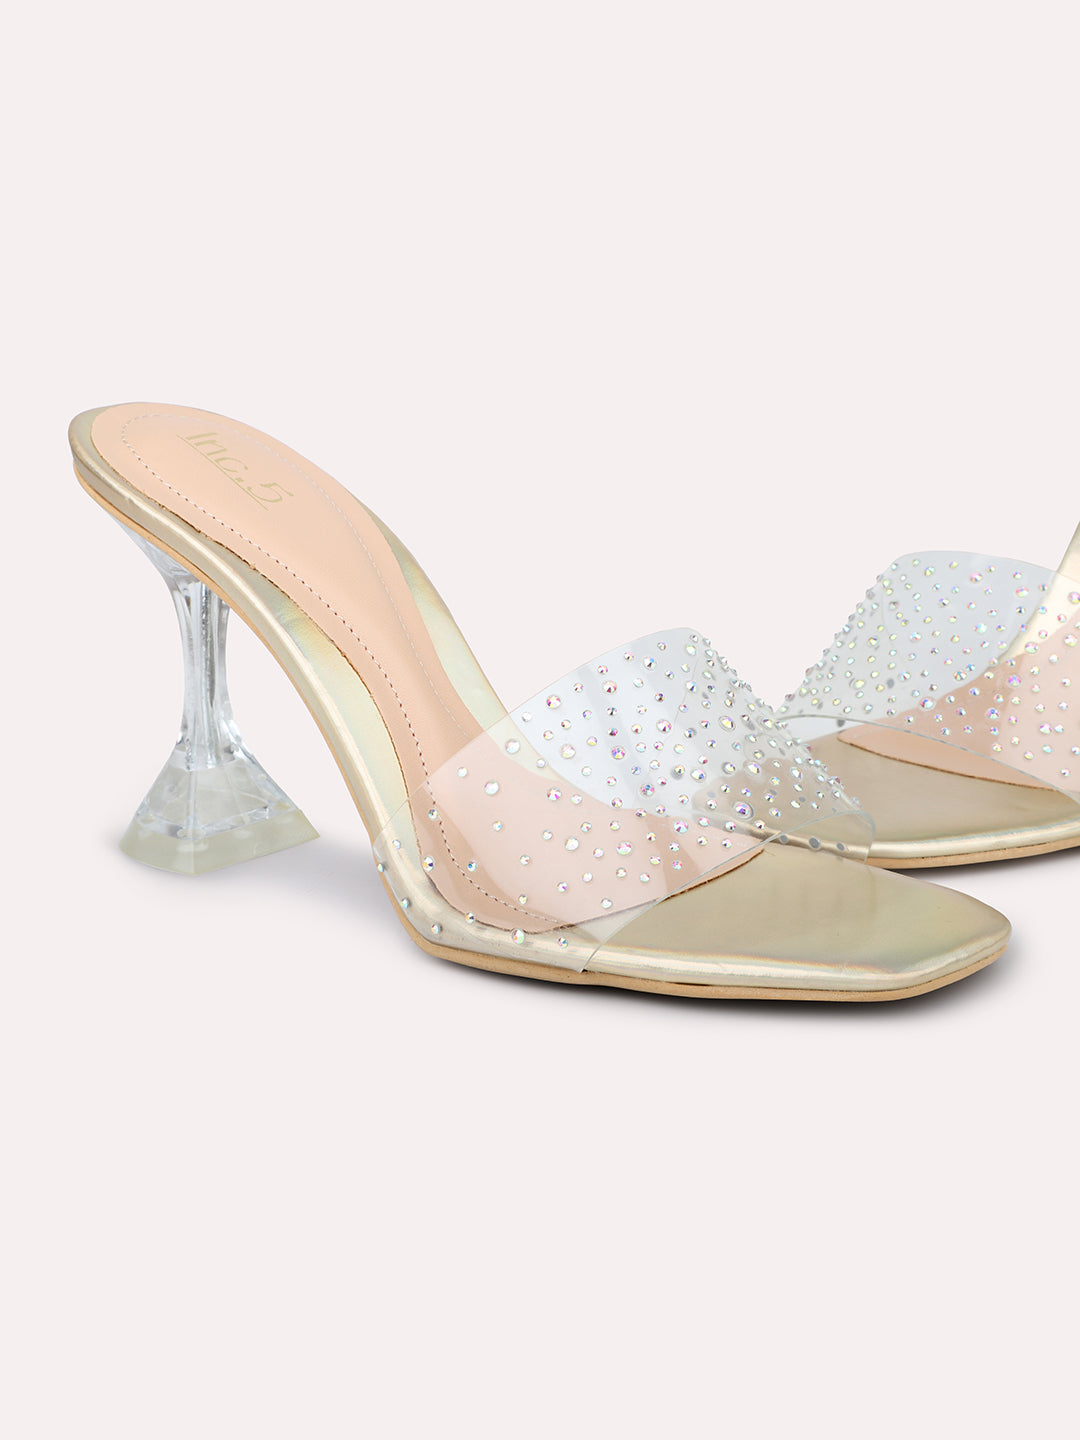 Buy Now Women White Printed Open Toe Kitten Heels – Inc5 Shoes